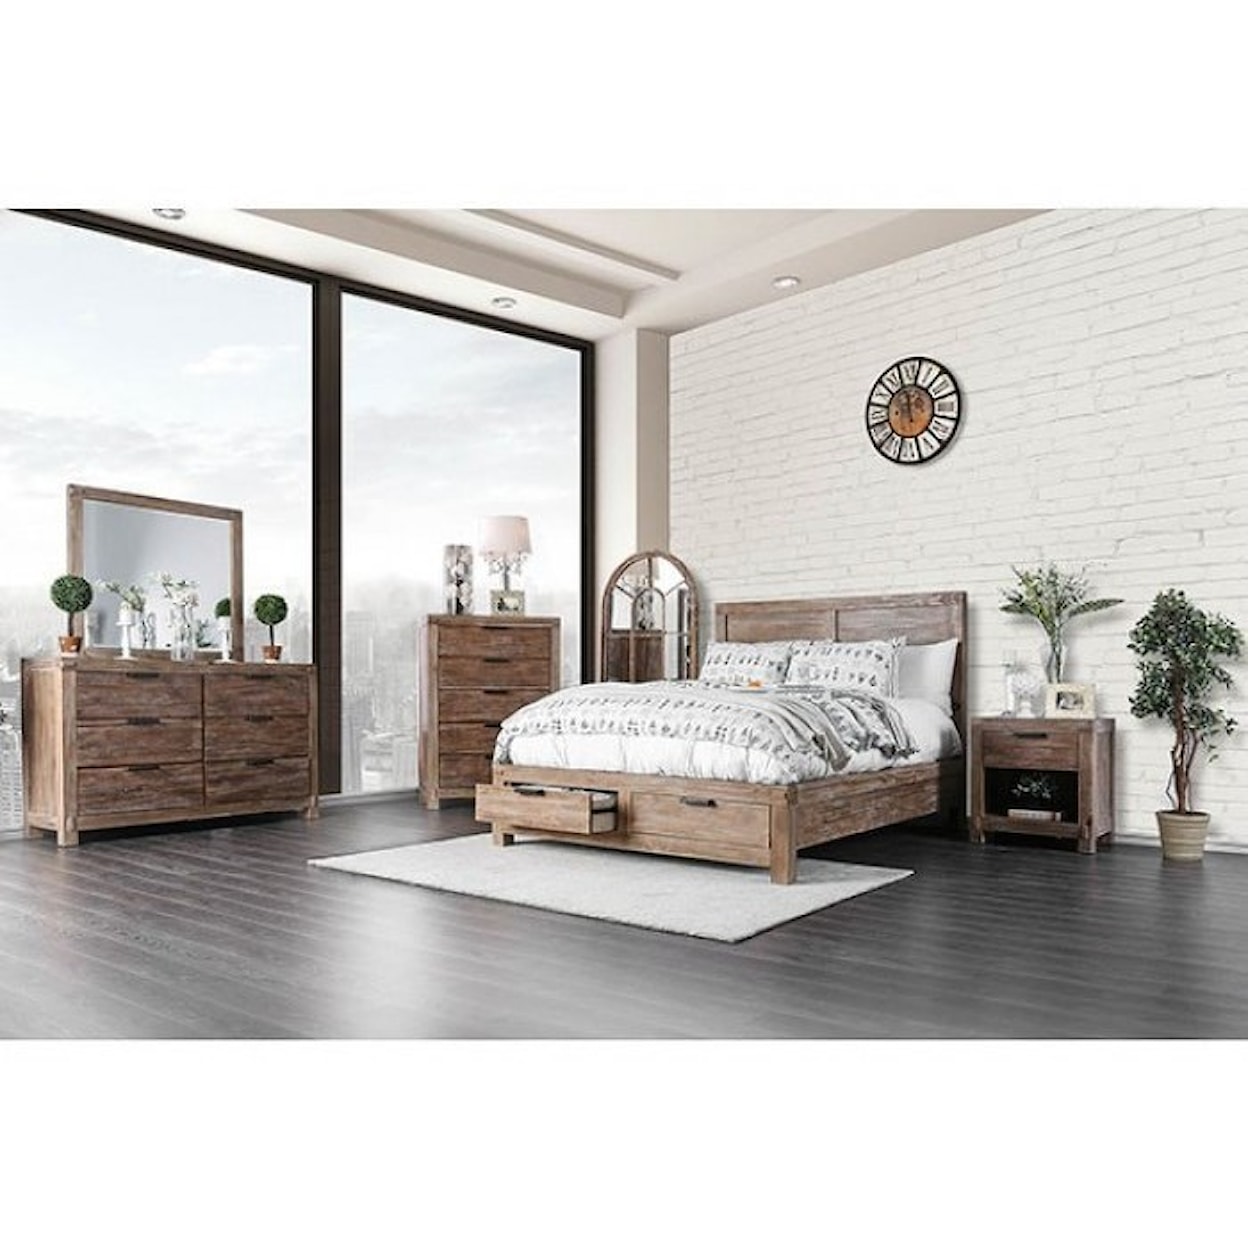 Furniture of America Wynton King Bedroom Group